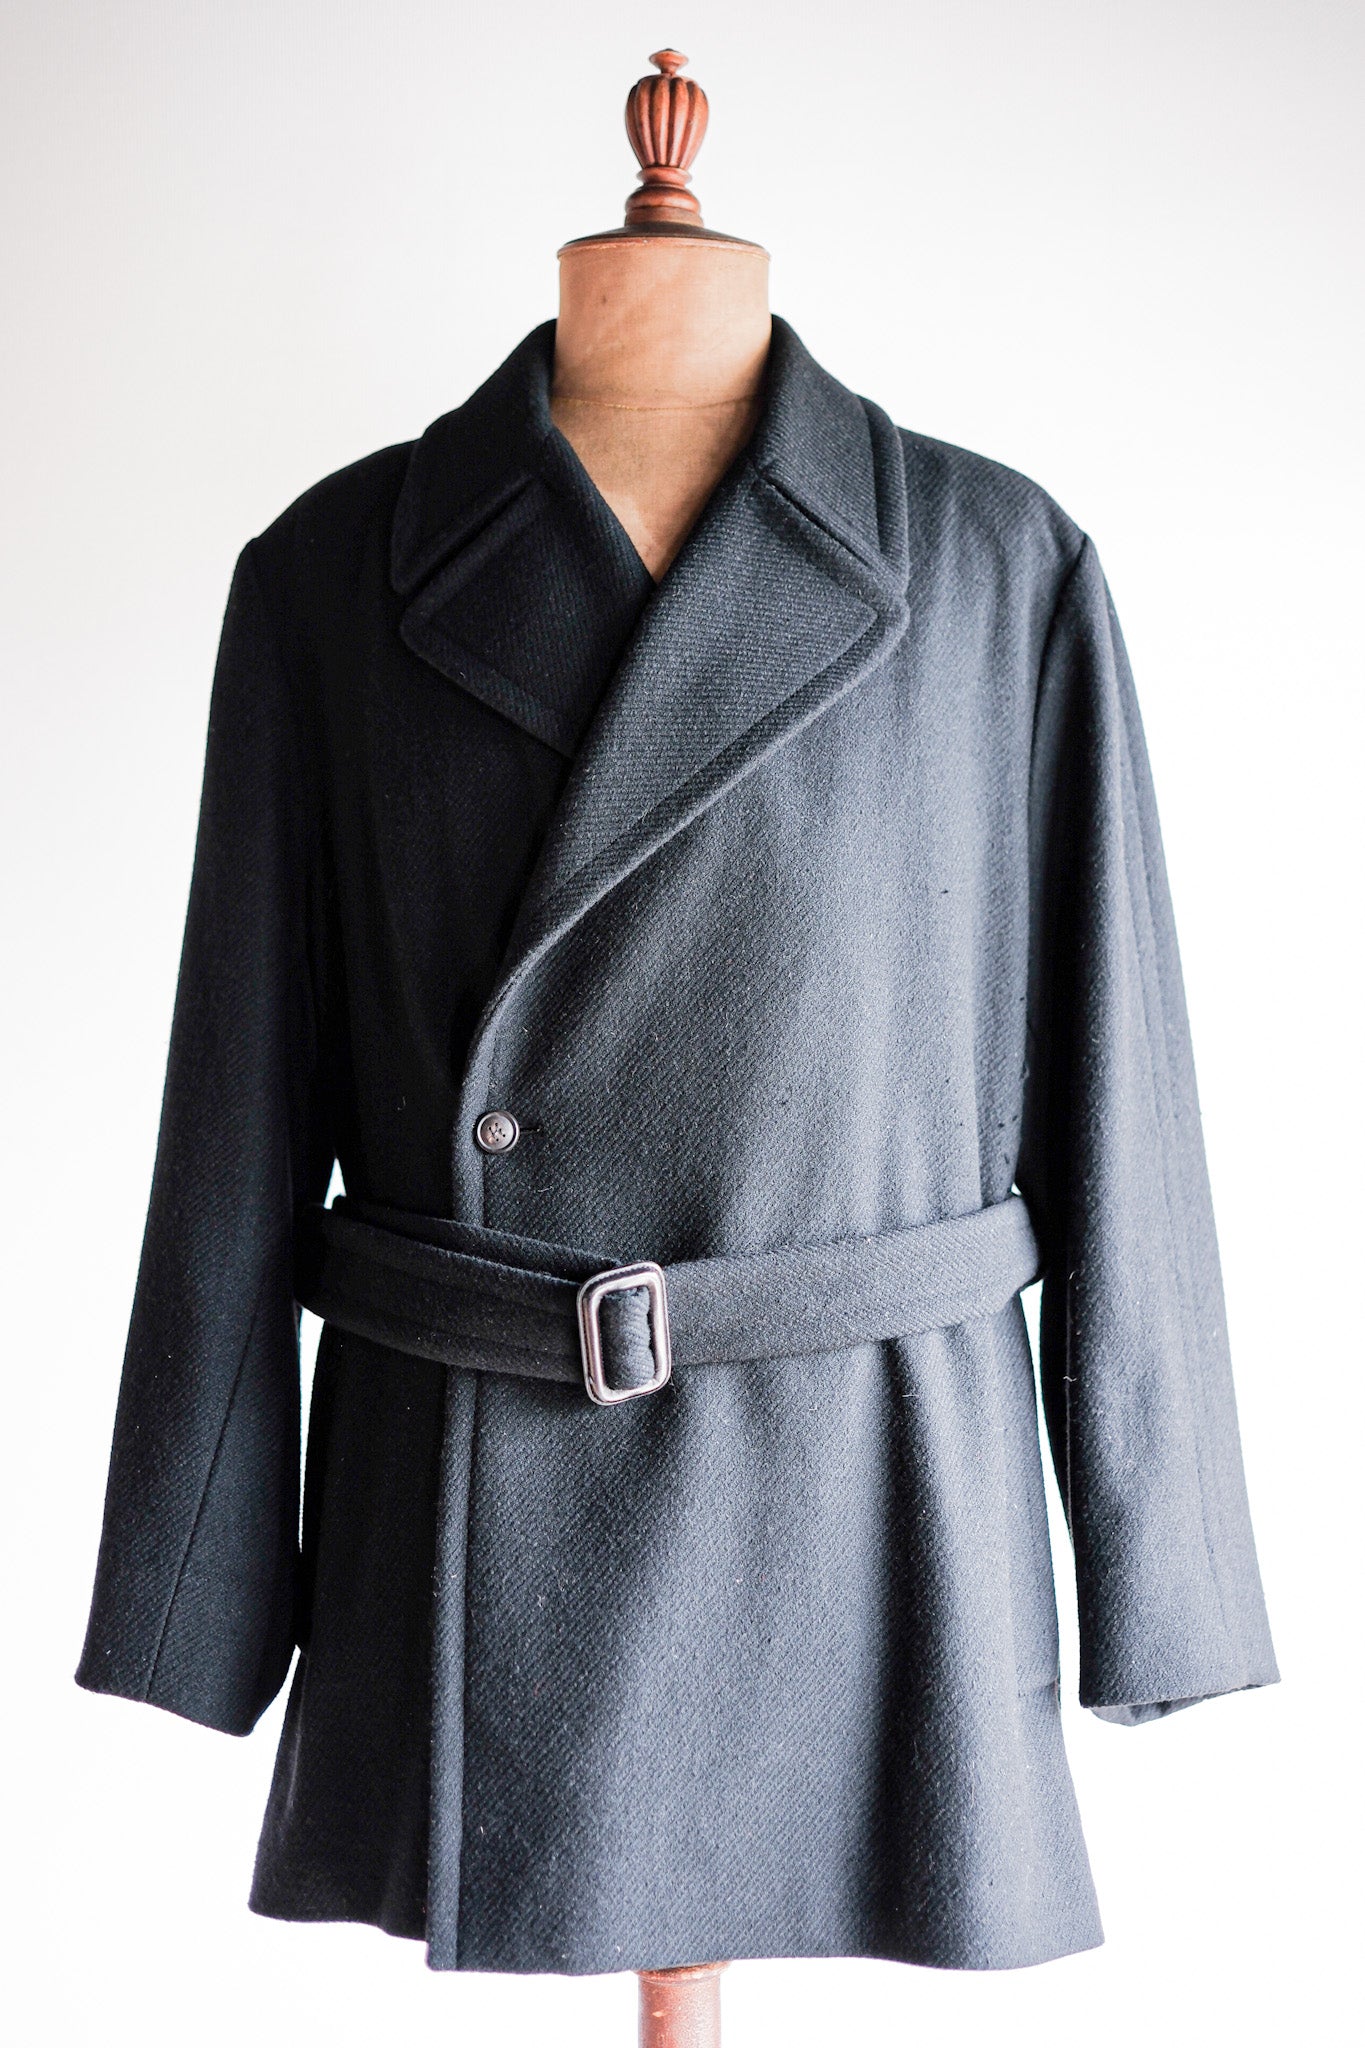 【~00's】Old Hermès Paris Cashmere Mix Wool Belted Coat by Martin Margiela